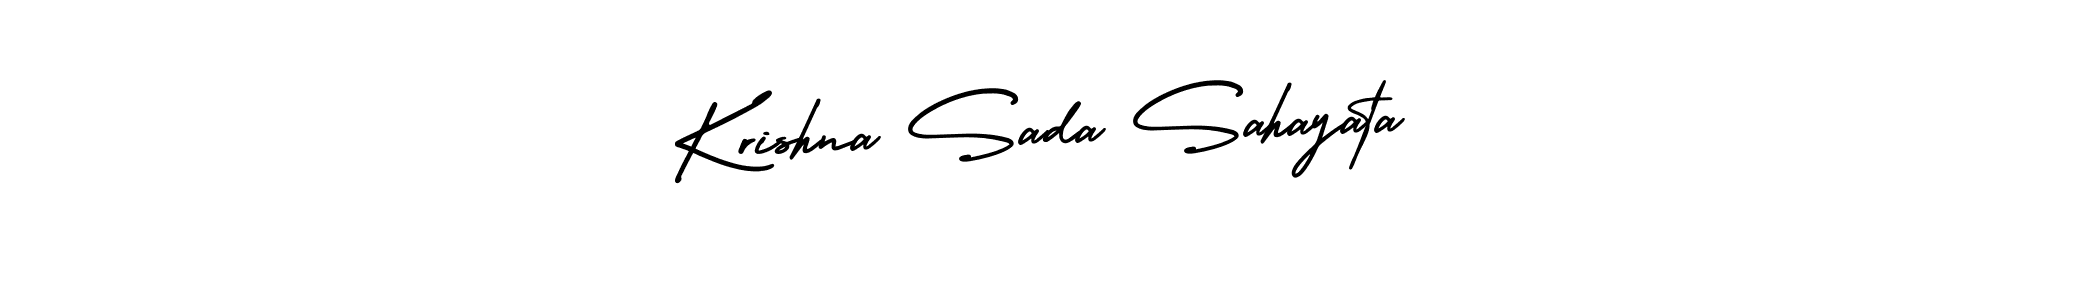 Best and Professional Signature Style for Krishna Sada Sahayata. AmerikaSignatureDemo-Regular Best Signature Style Collection. Krishna Sada Sahayata signature style 3 images and pictures png